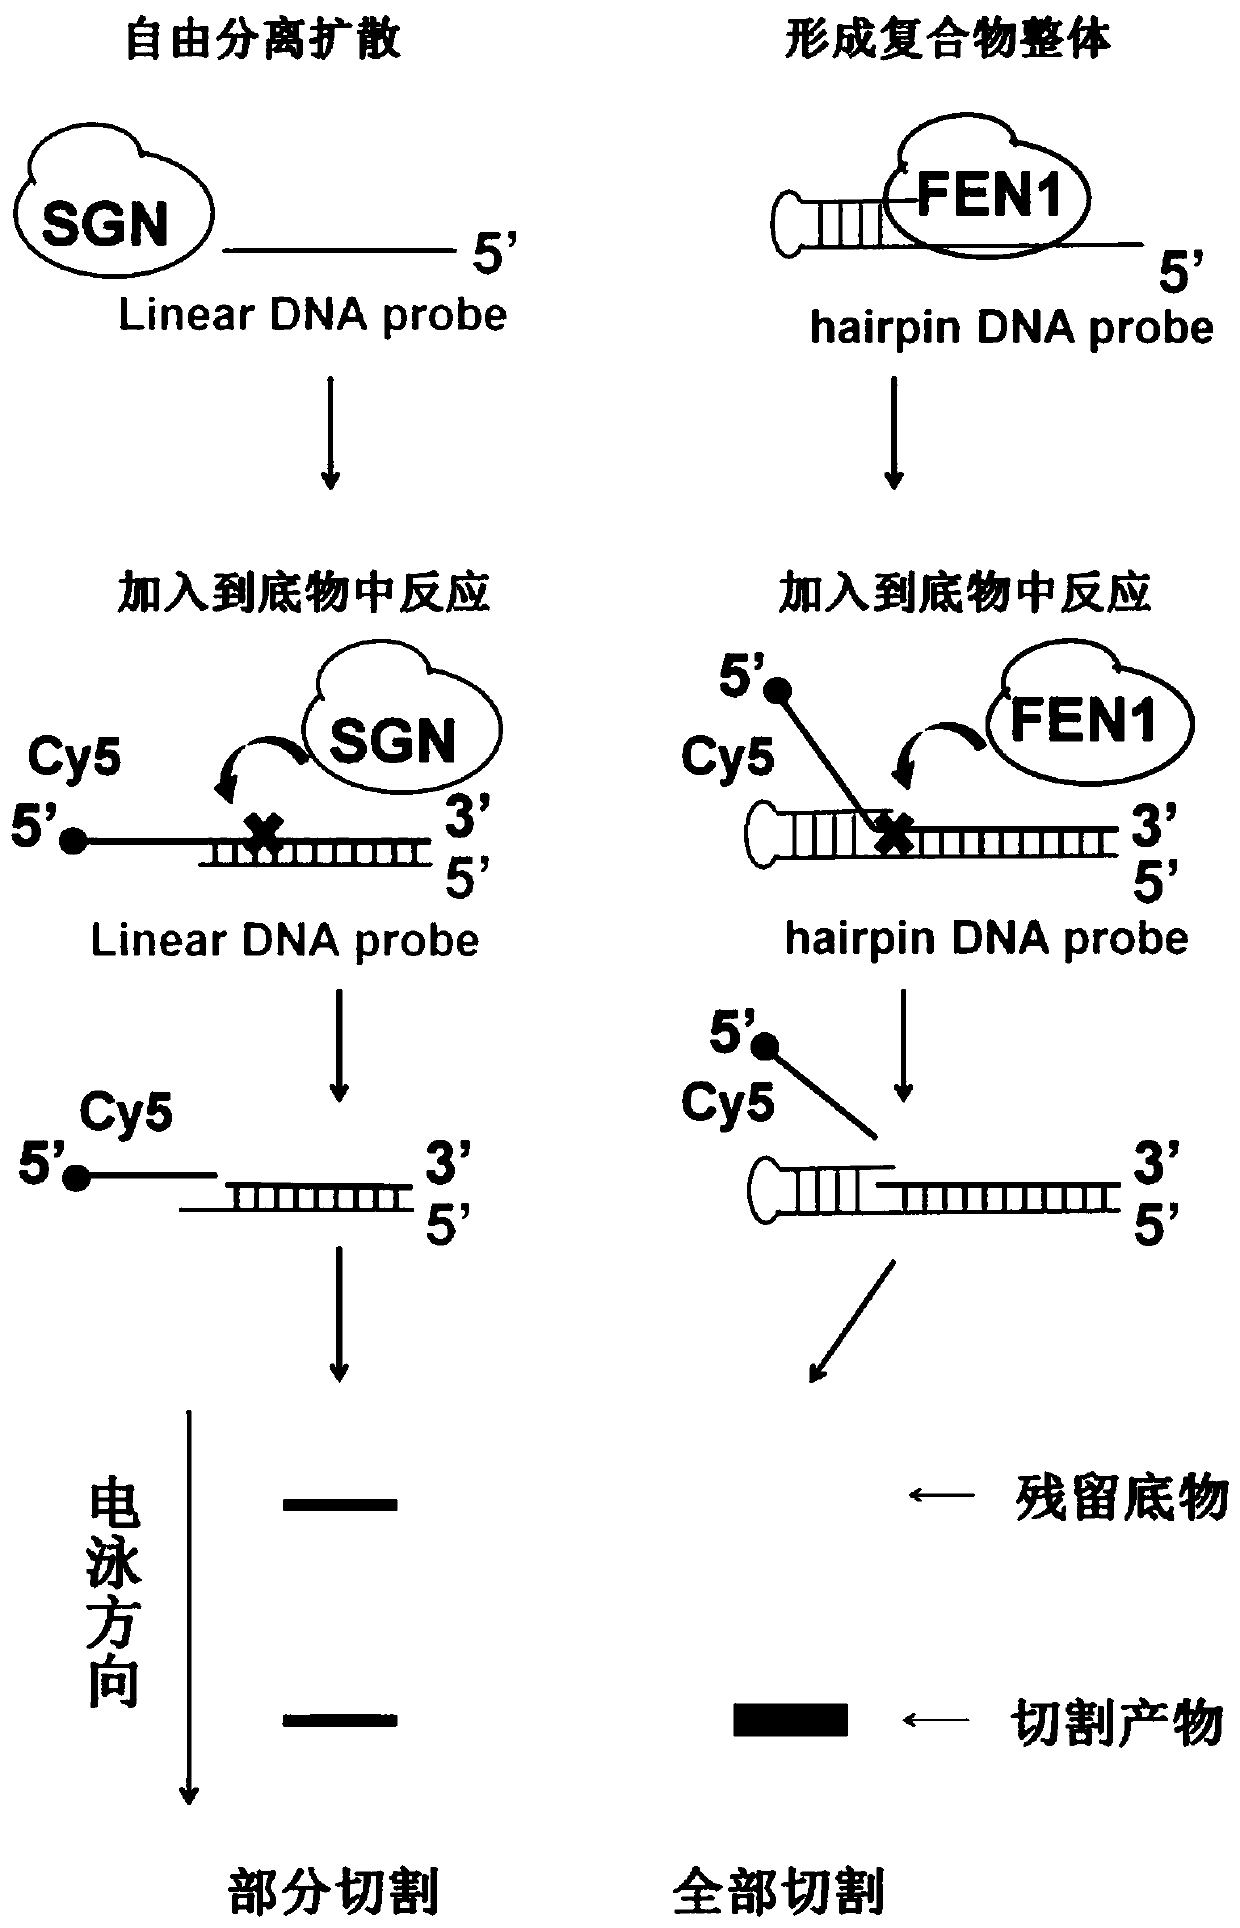 Random nucleic acid editing composition and method